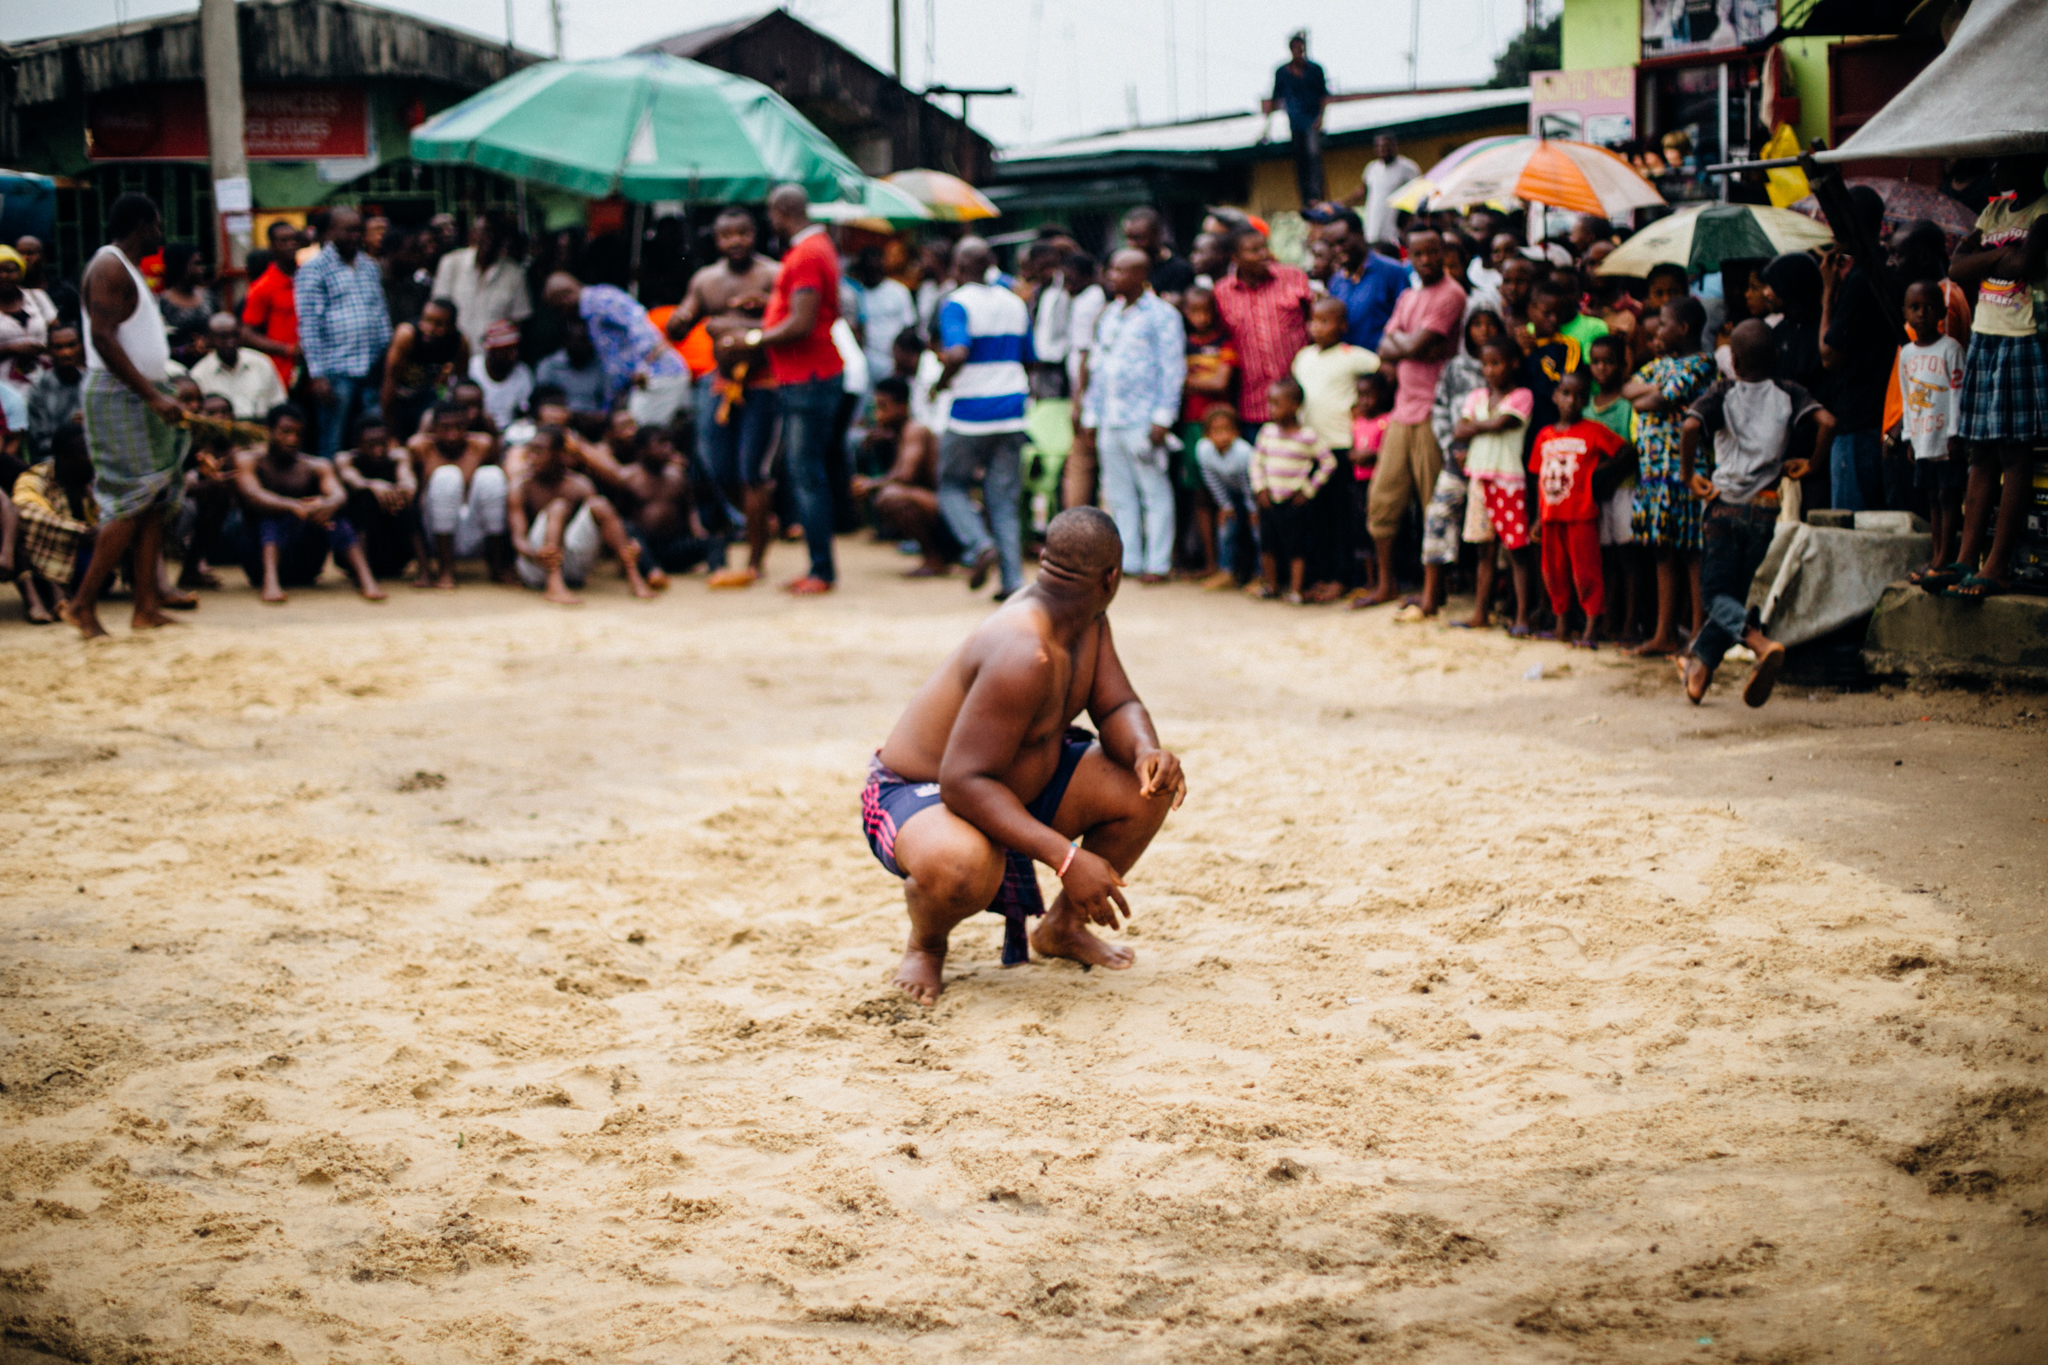 Squatting Wrestler, Egelege Festival, Rumuola, Port Harcourt